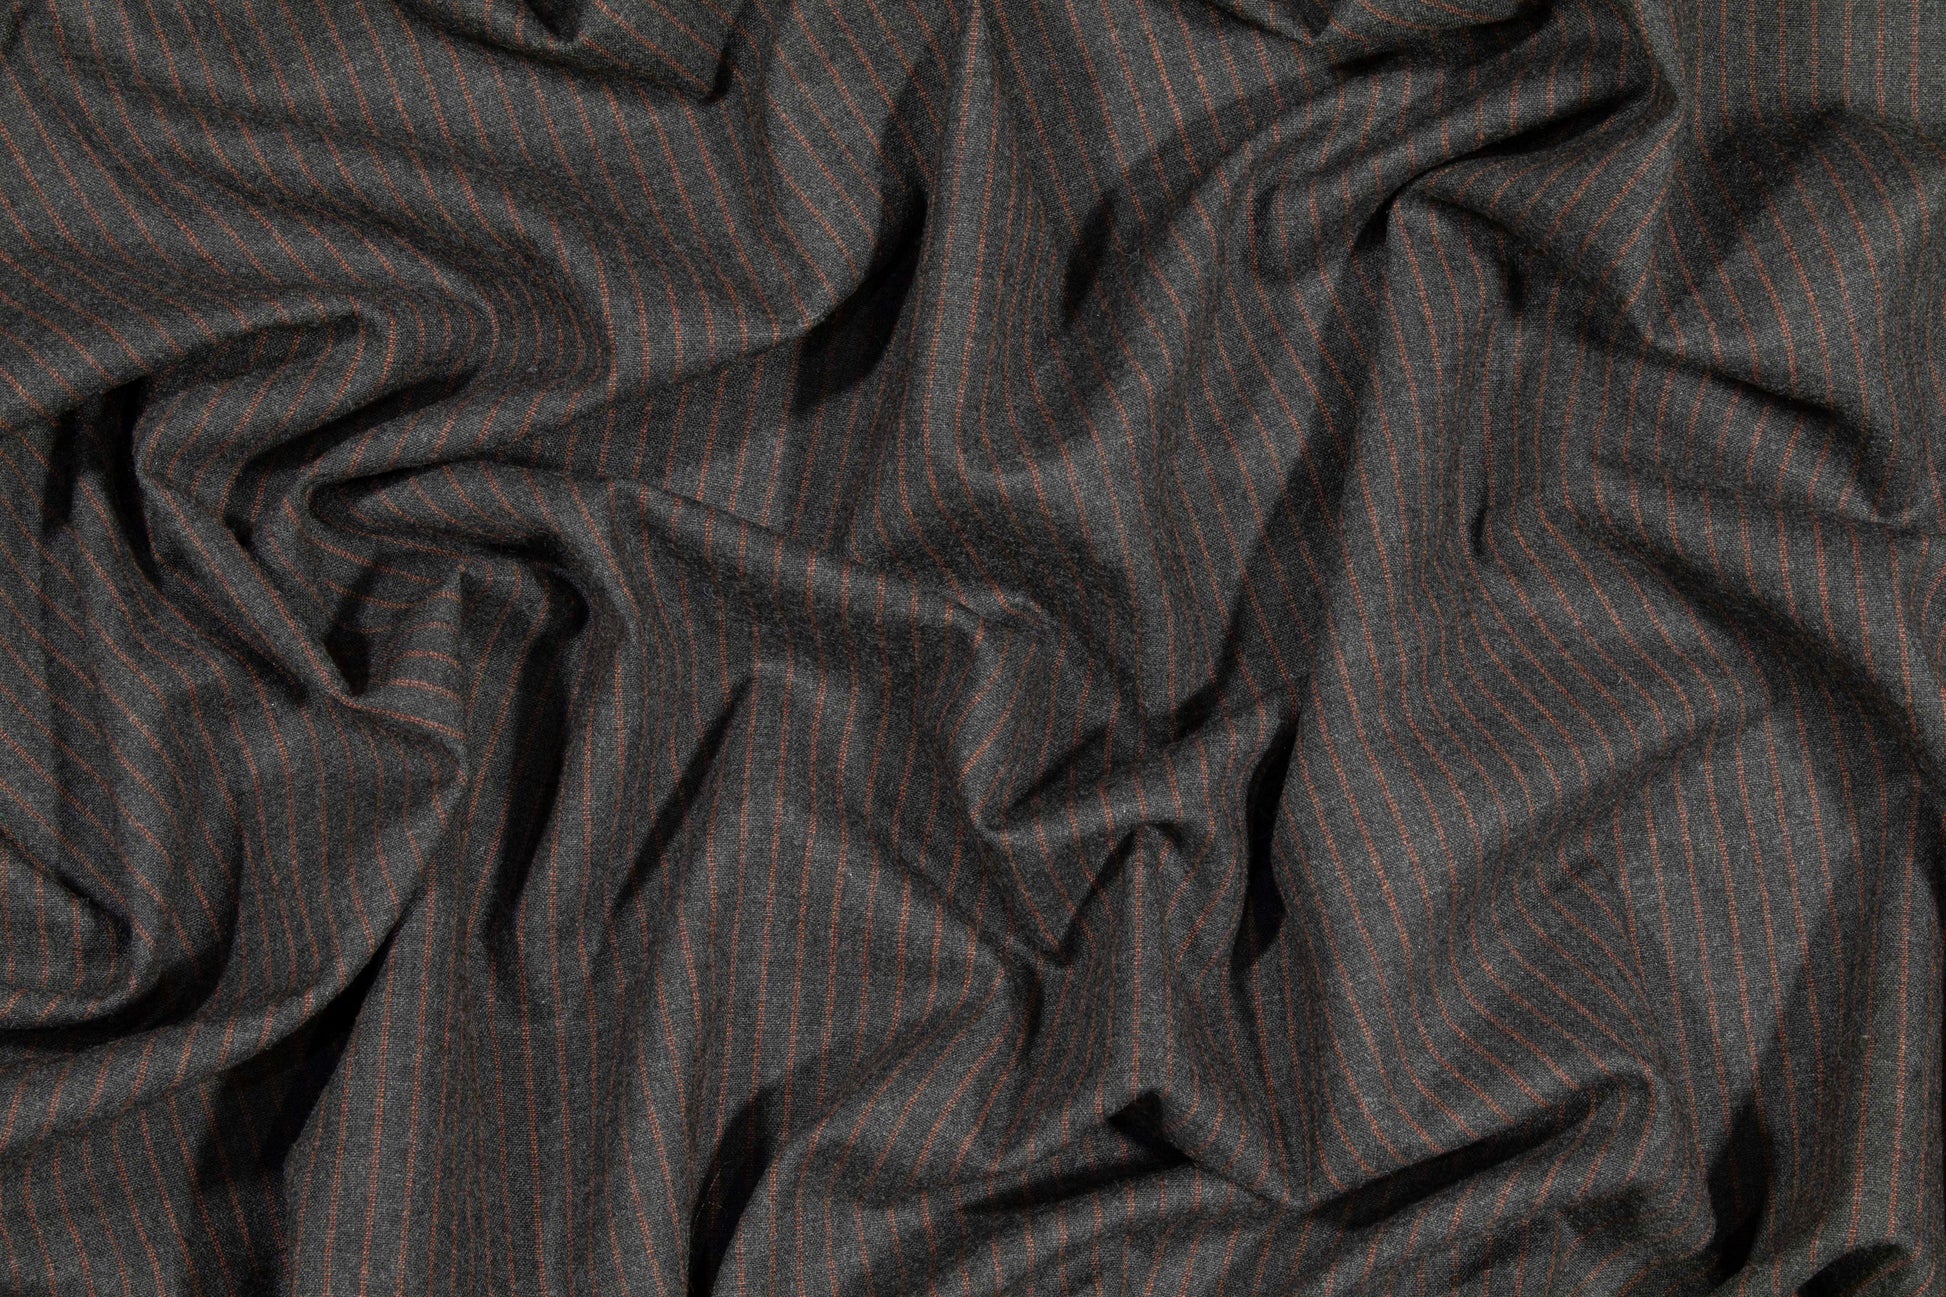 Pin Striped Italian Wool Suiting - Charcoal Gray and Burned Orange - Prime Fabrics